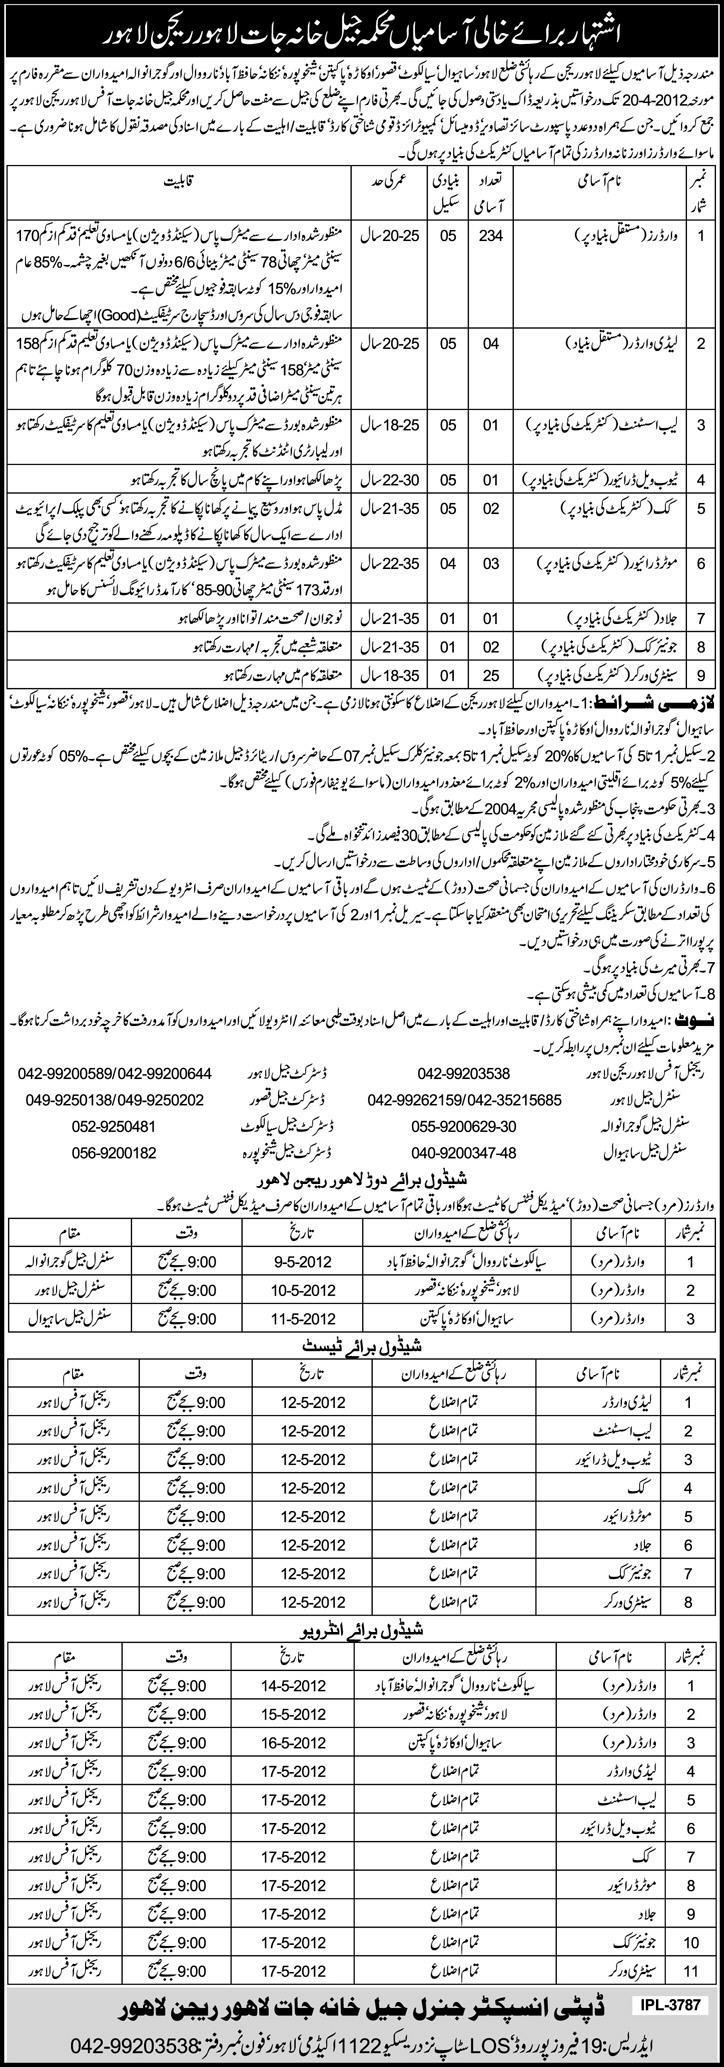 Prisons Department Lahore Region (Govt) Jobs